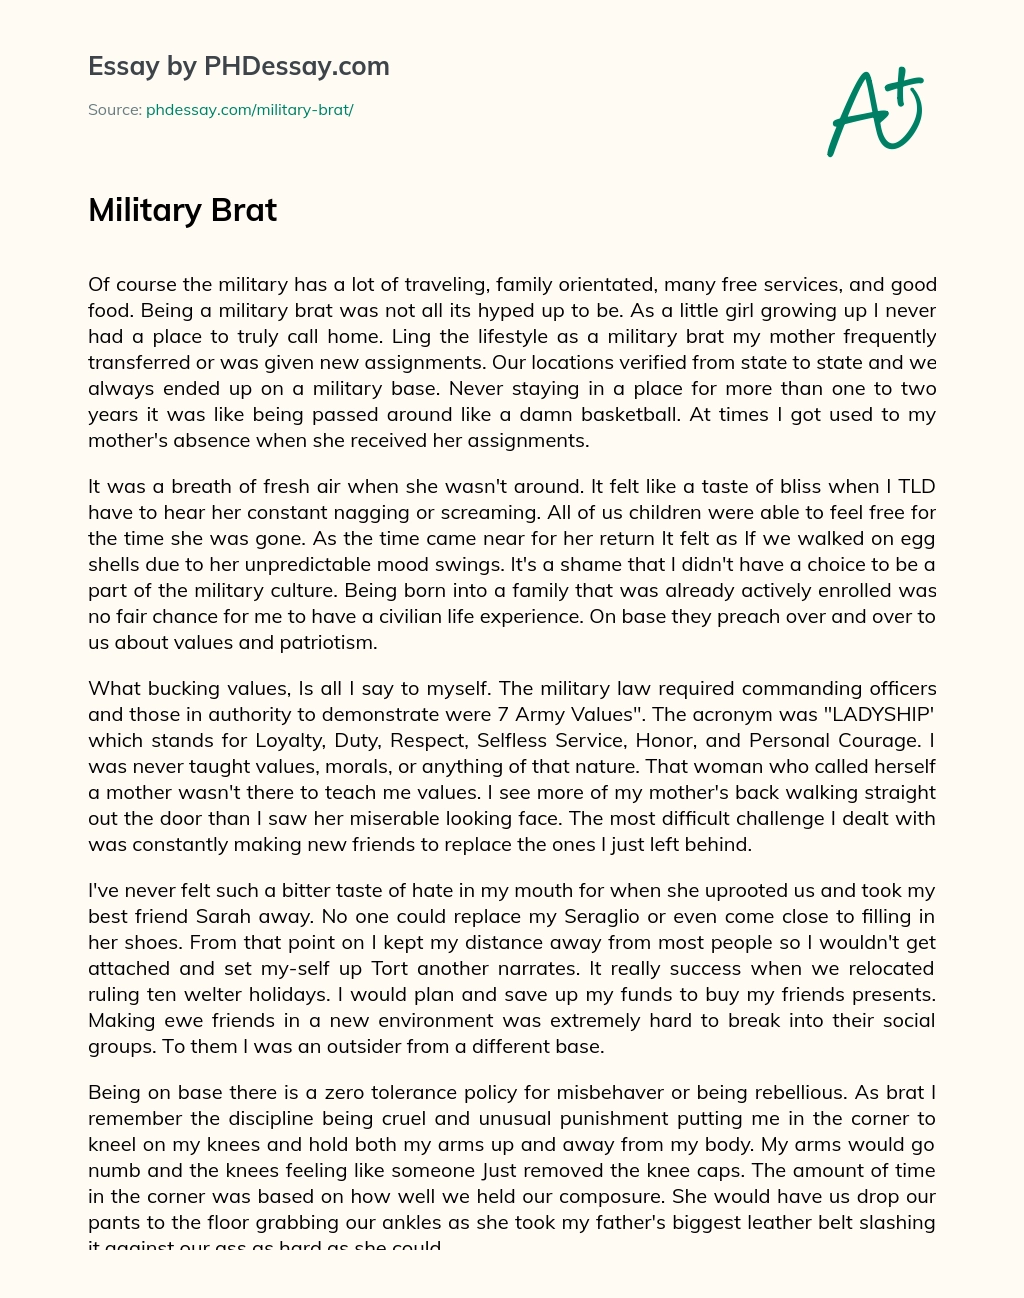 Military Brat essay